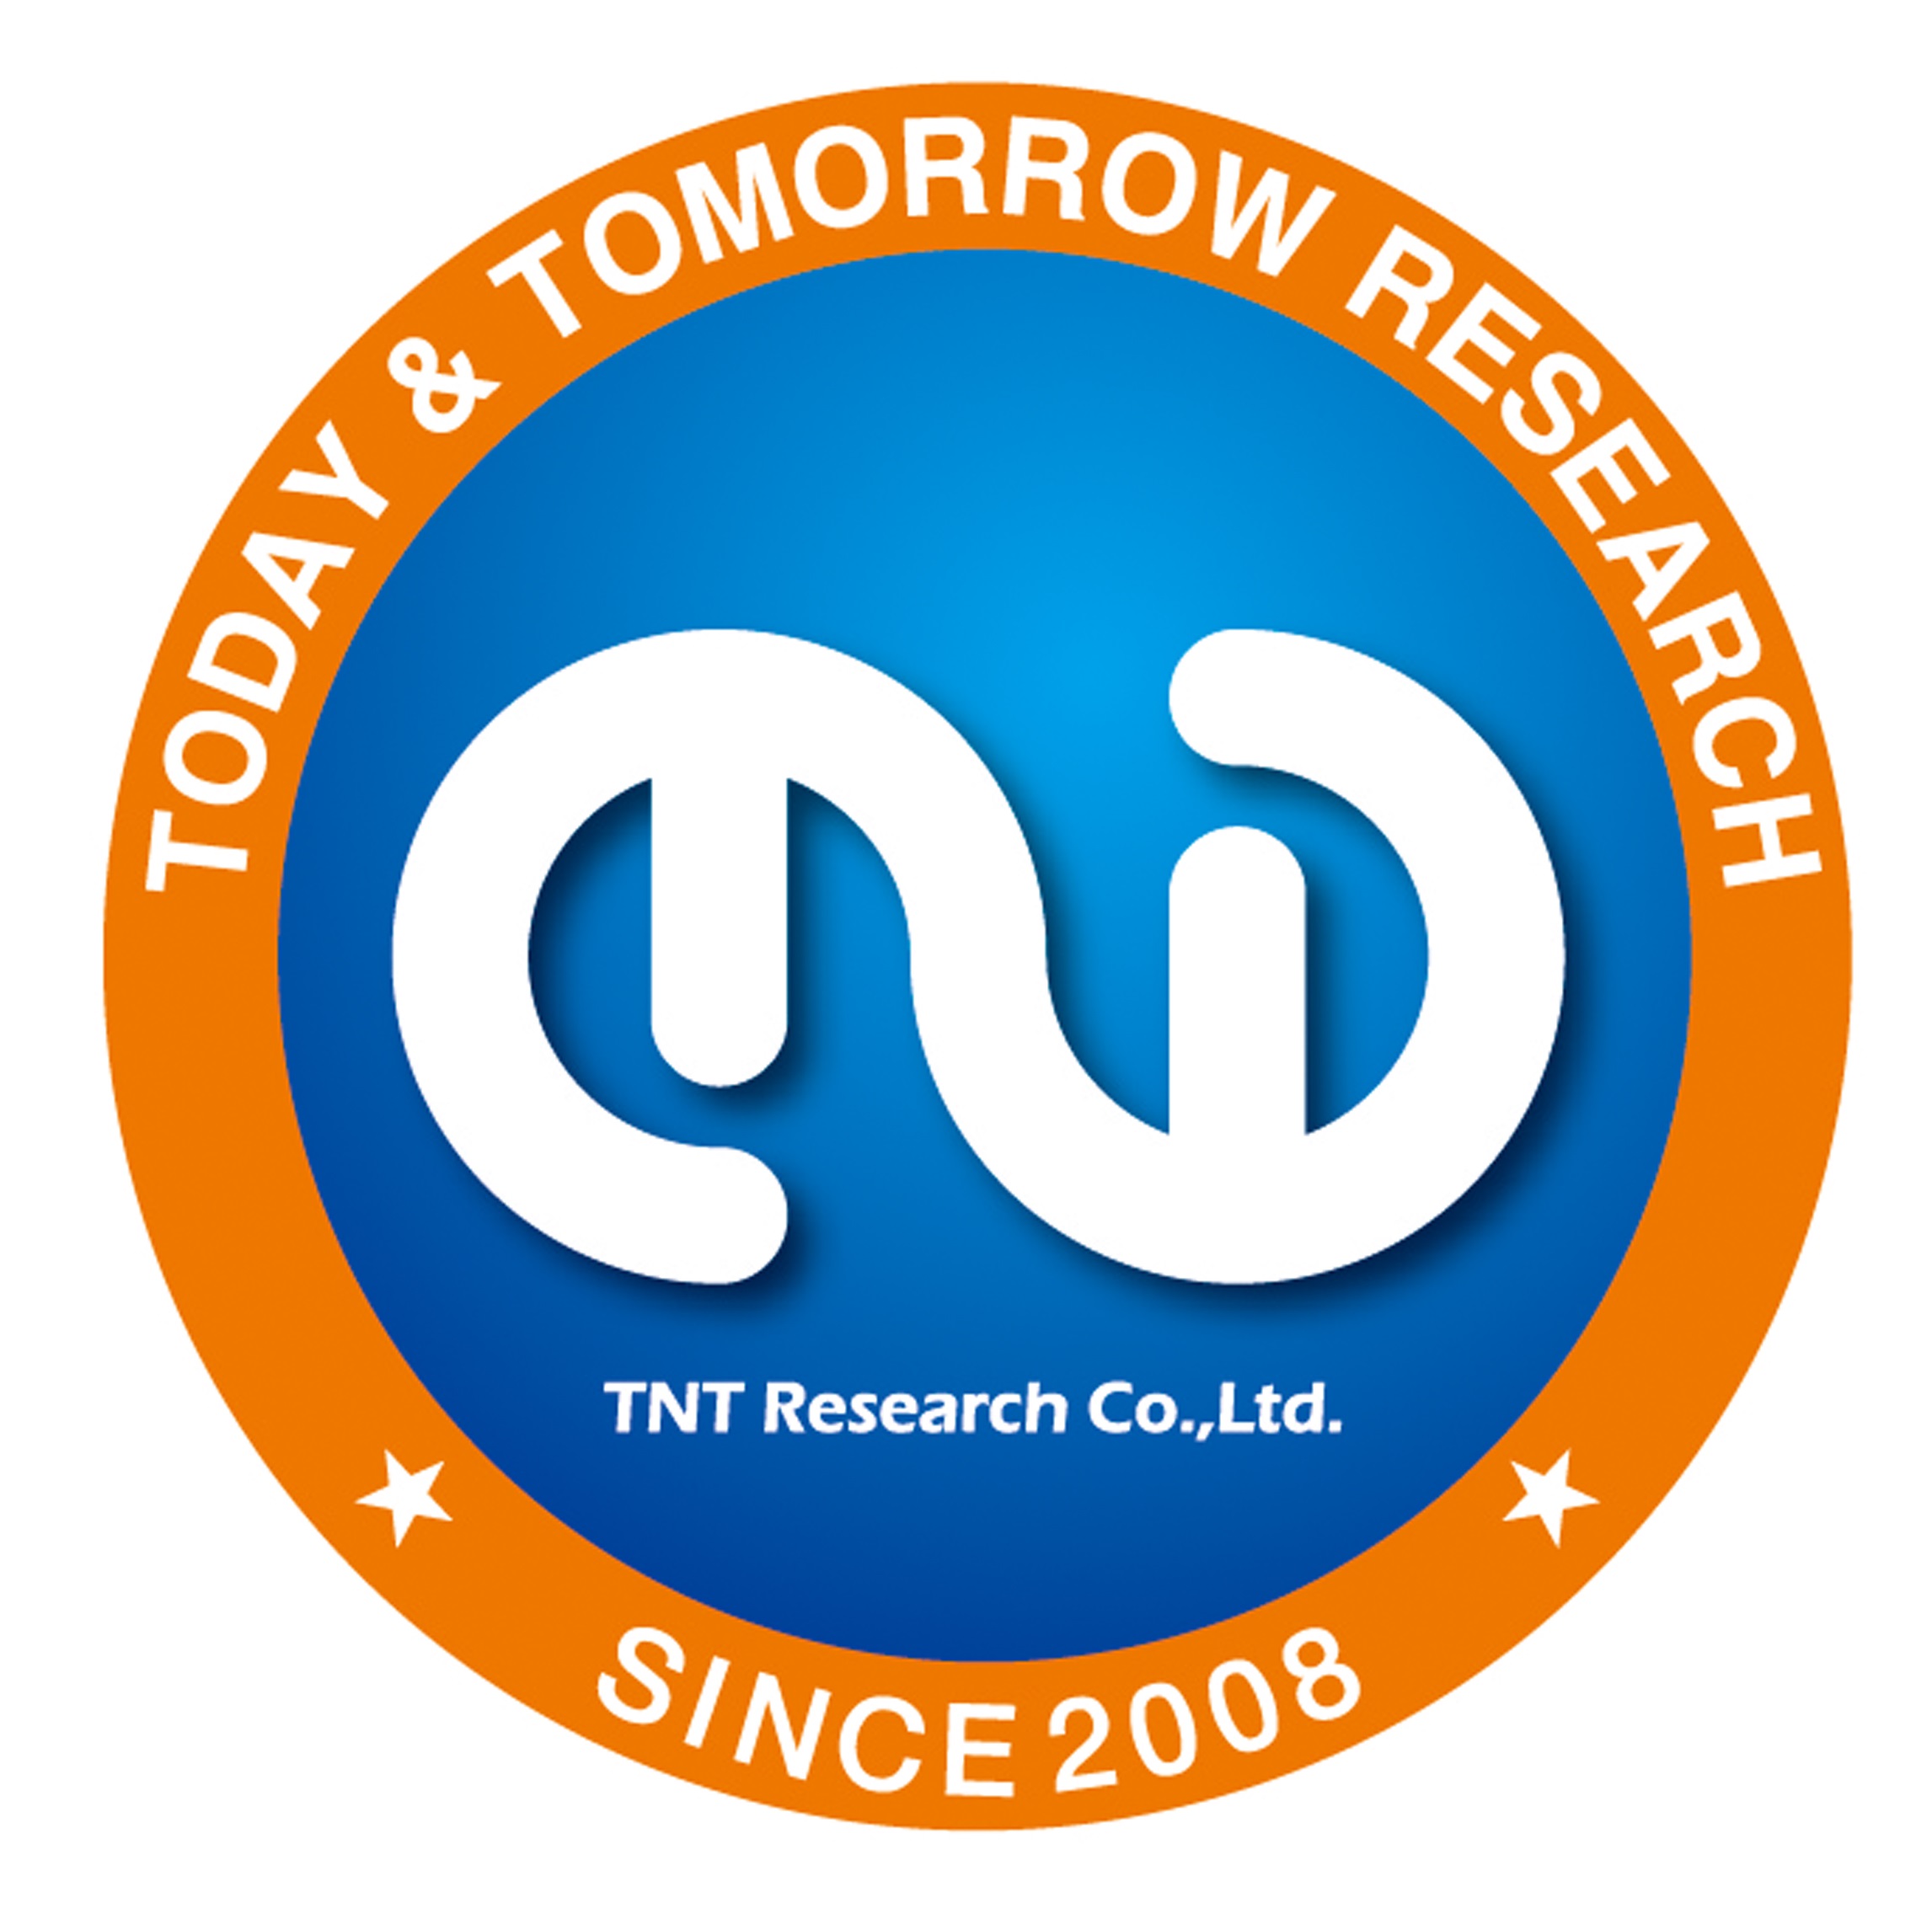 TNT Research